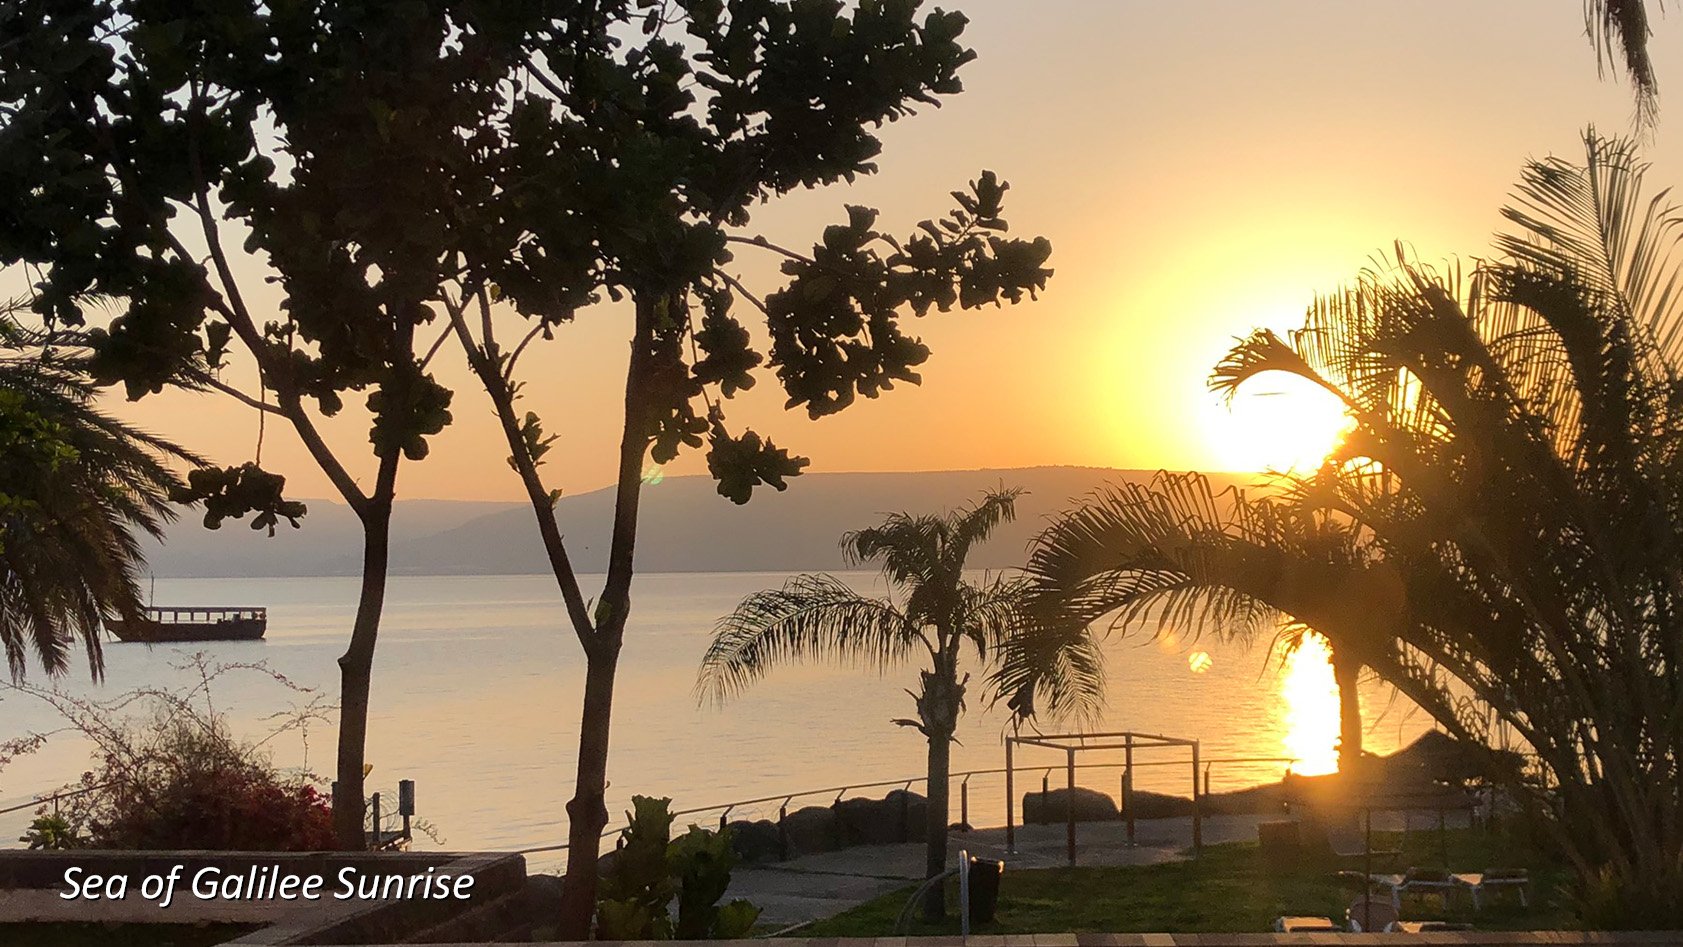 Sea of Galilee Sunrise - March 2019 - captioned.jpg